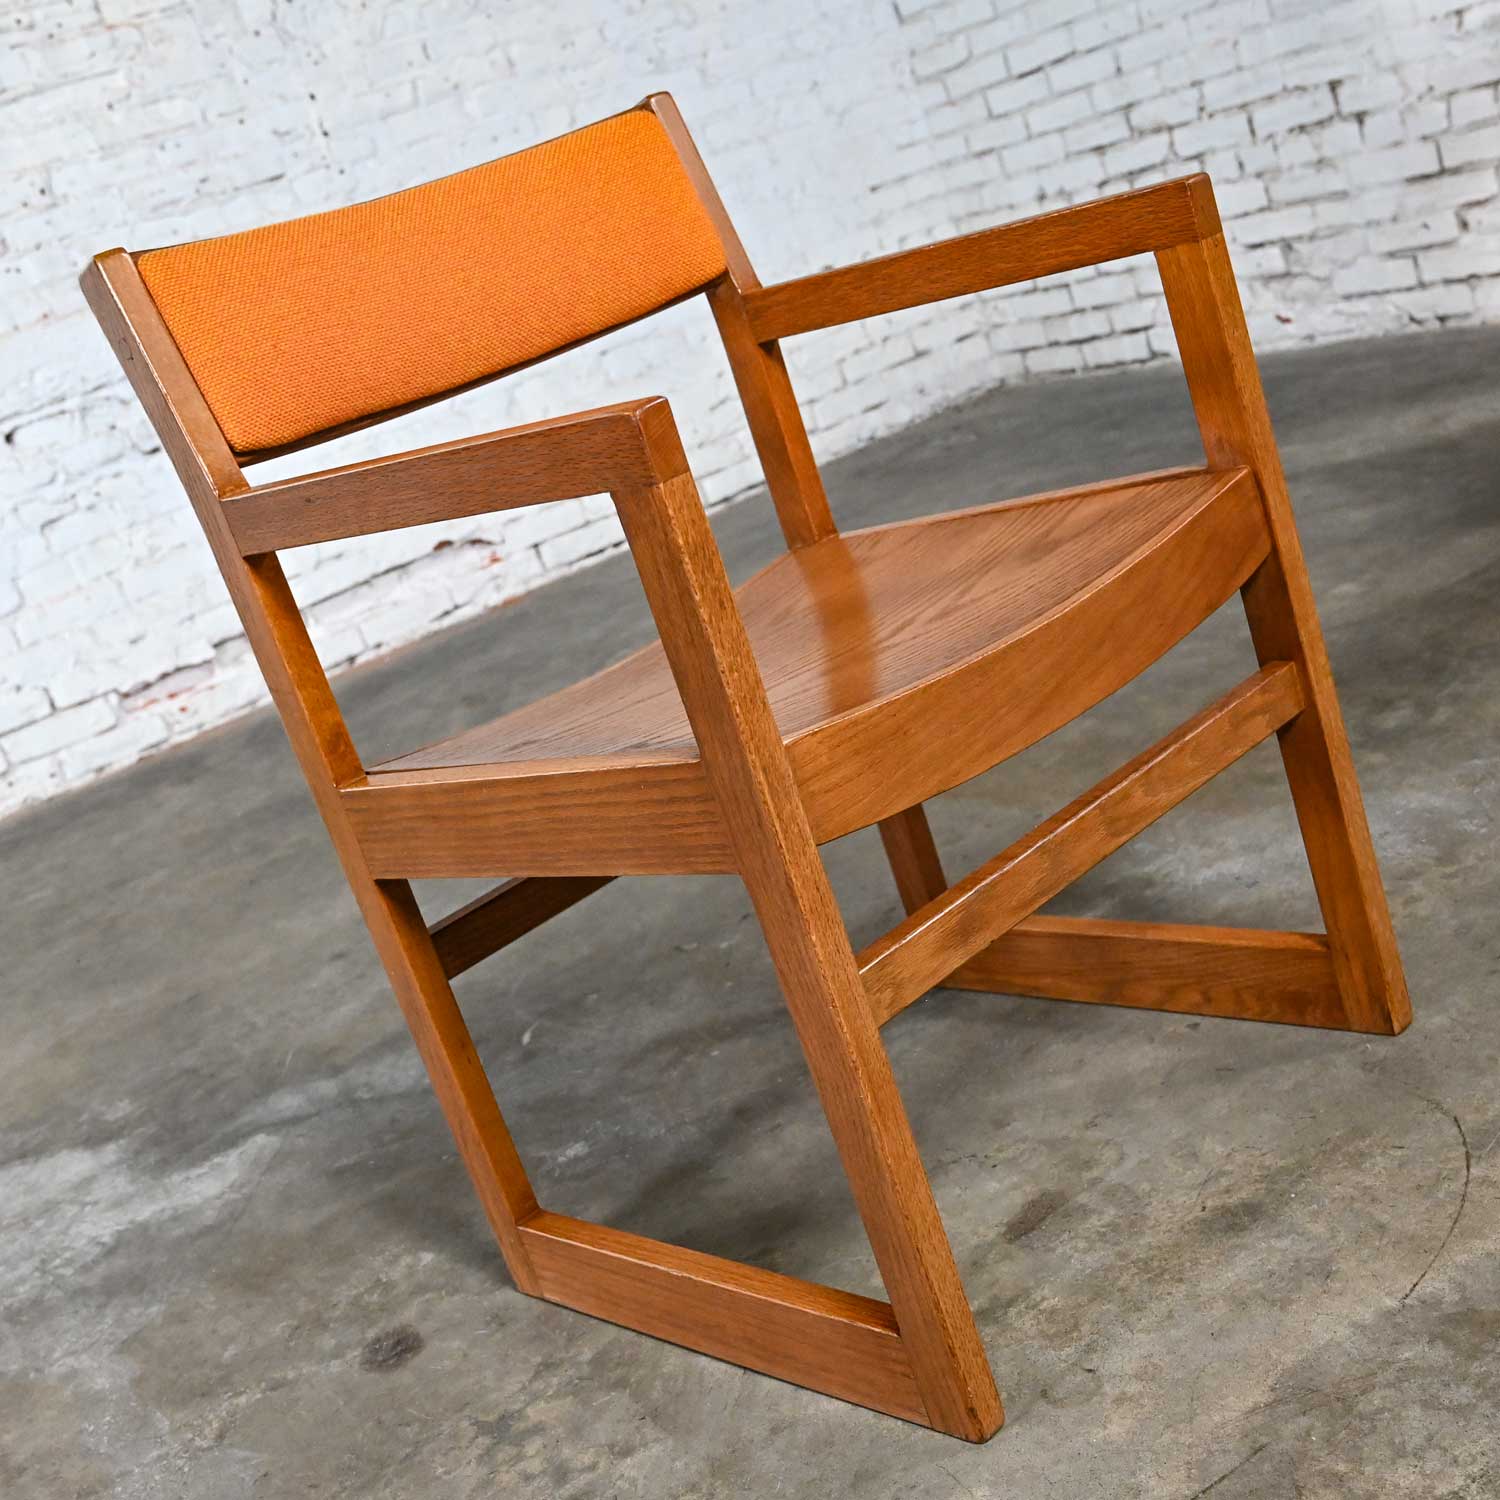 1970’s Modern Jasper Chair Co Oak Dining Chairs Golden Orange Tweed Hopsacking Bentwood Seats & Sleigh Bases Set of 8